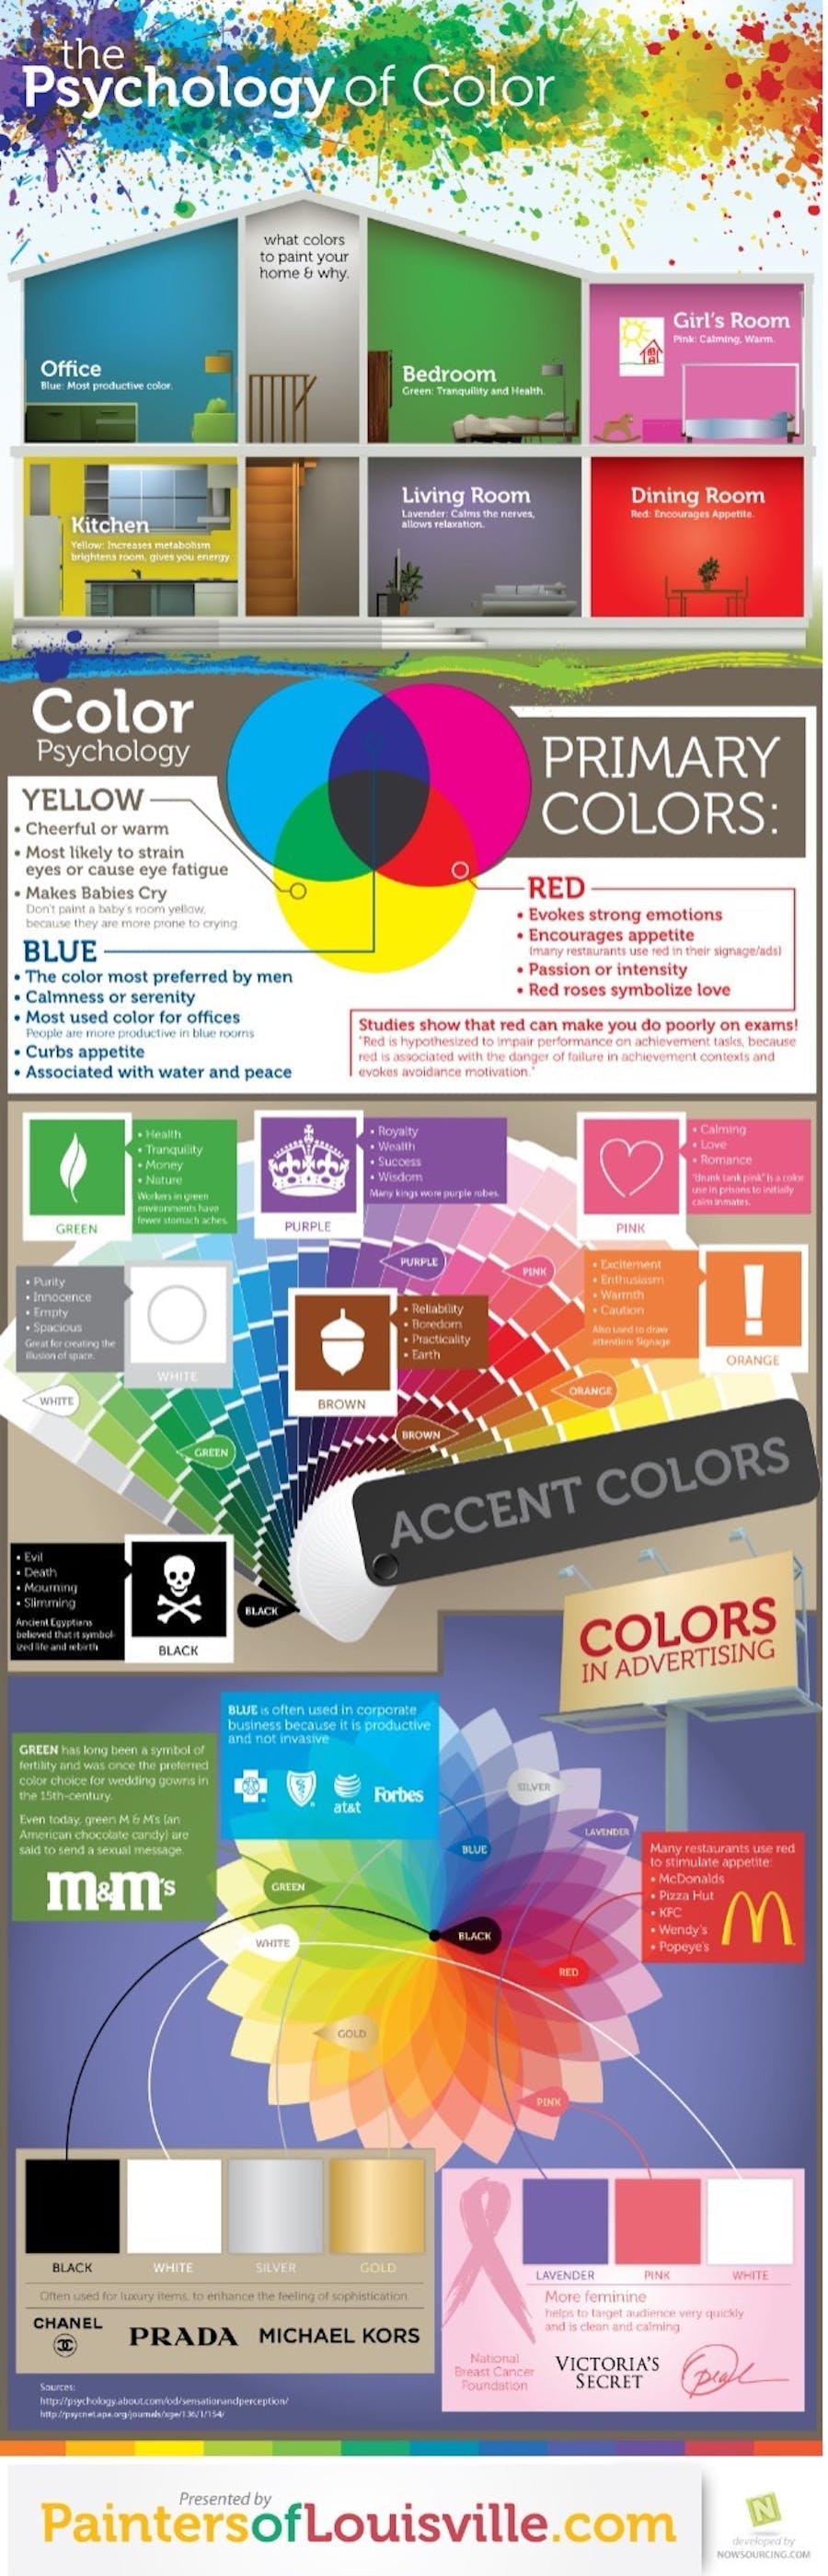 Kleurenpsychologie infographic.